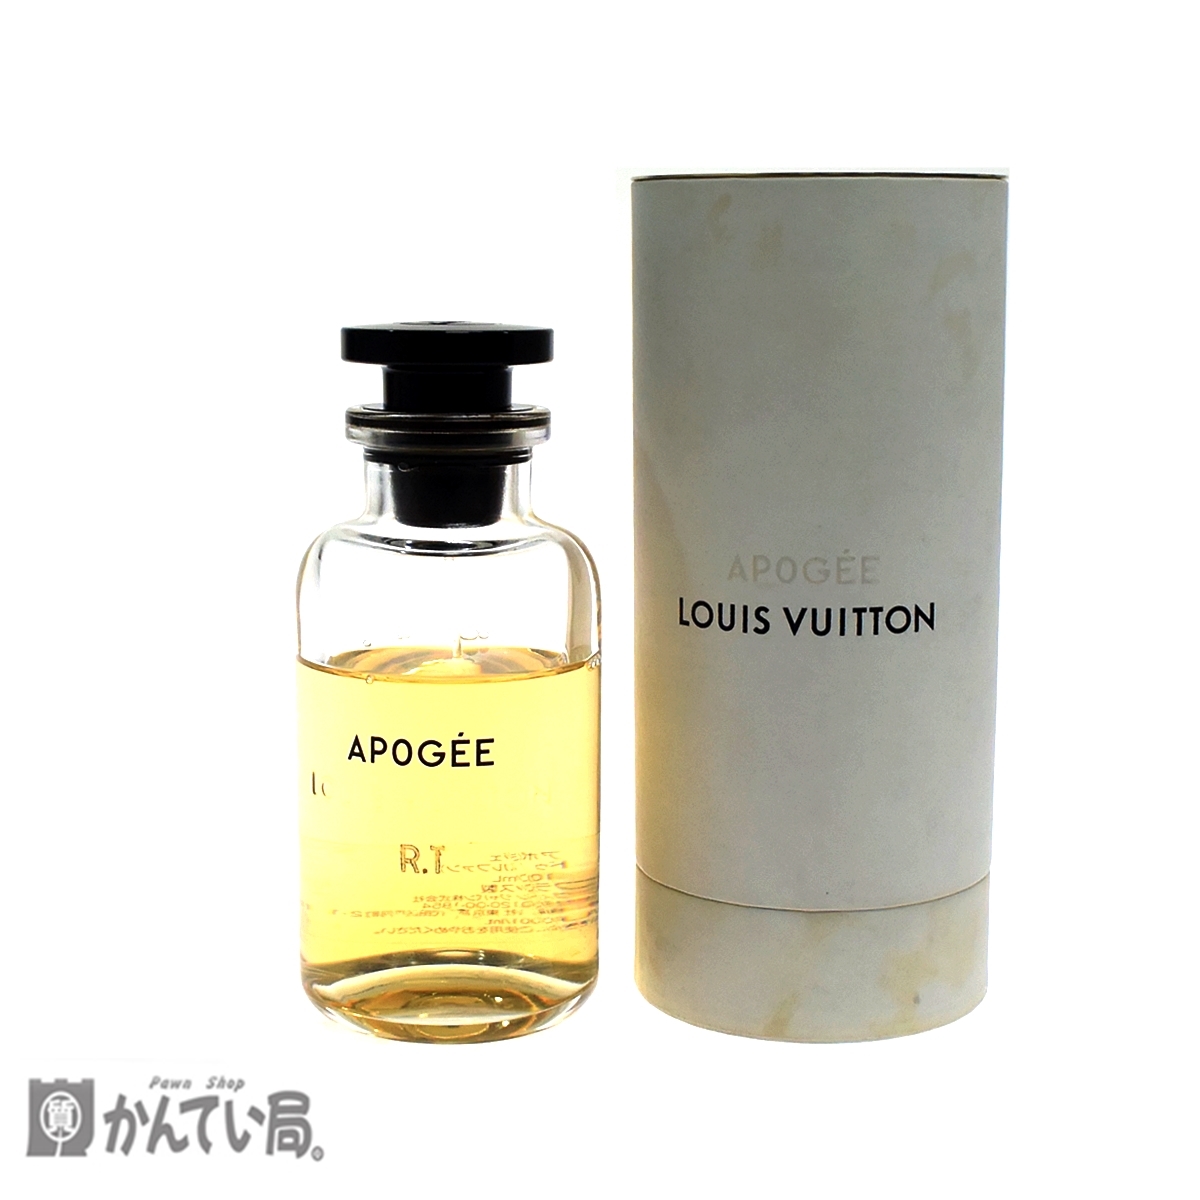 LOUIS VUITTON APOGEE アポジェ 100ml 香水 - 香水(ユニセックス)